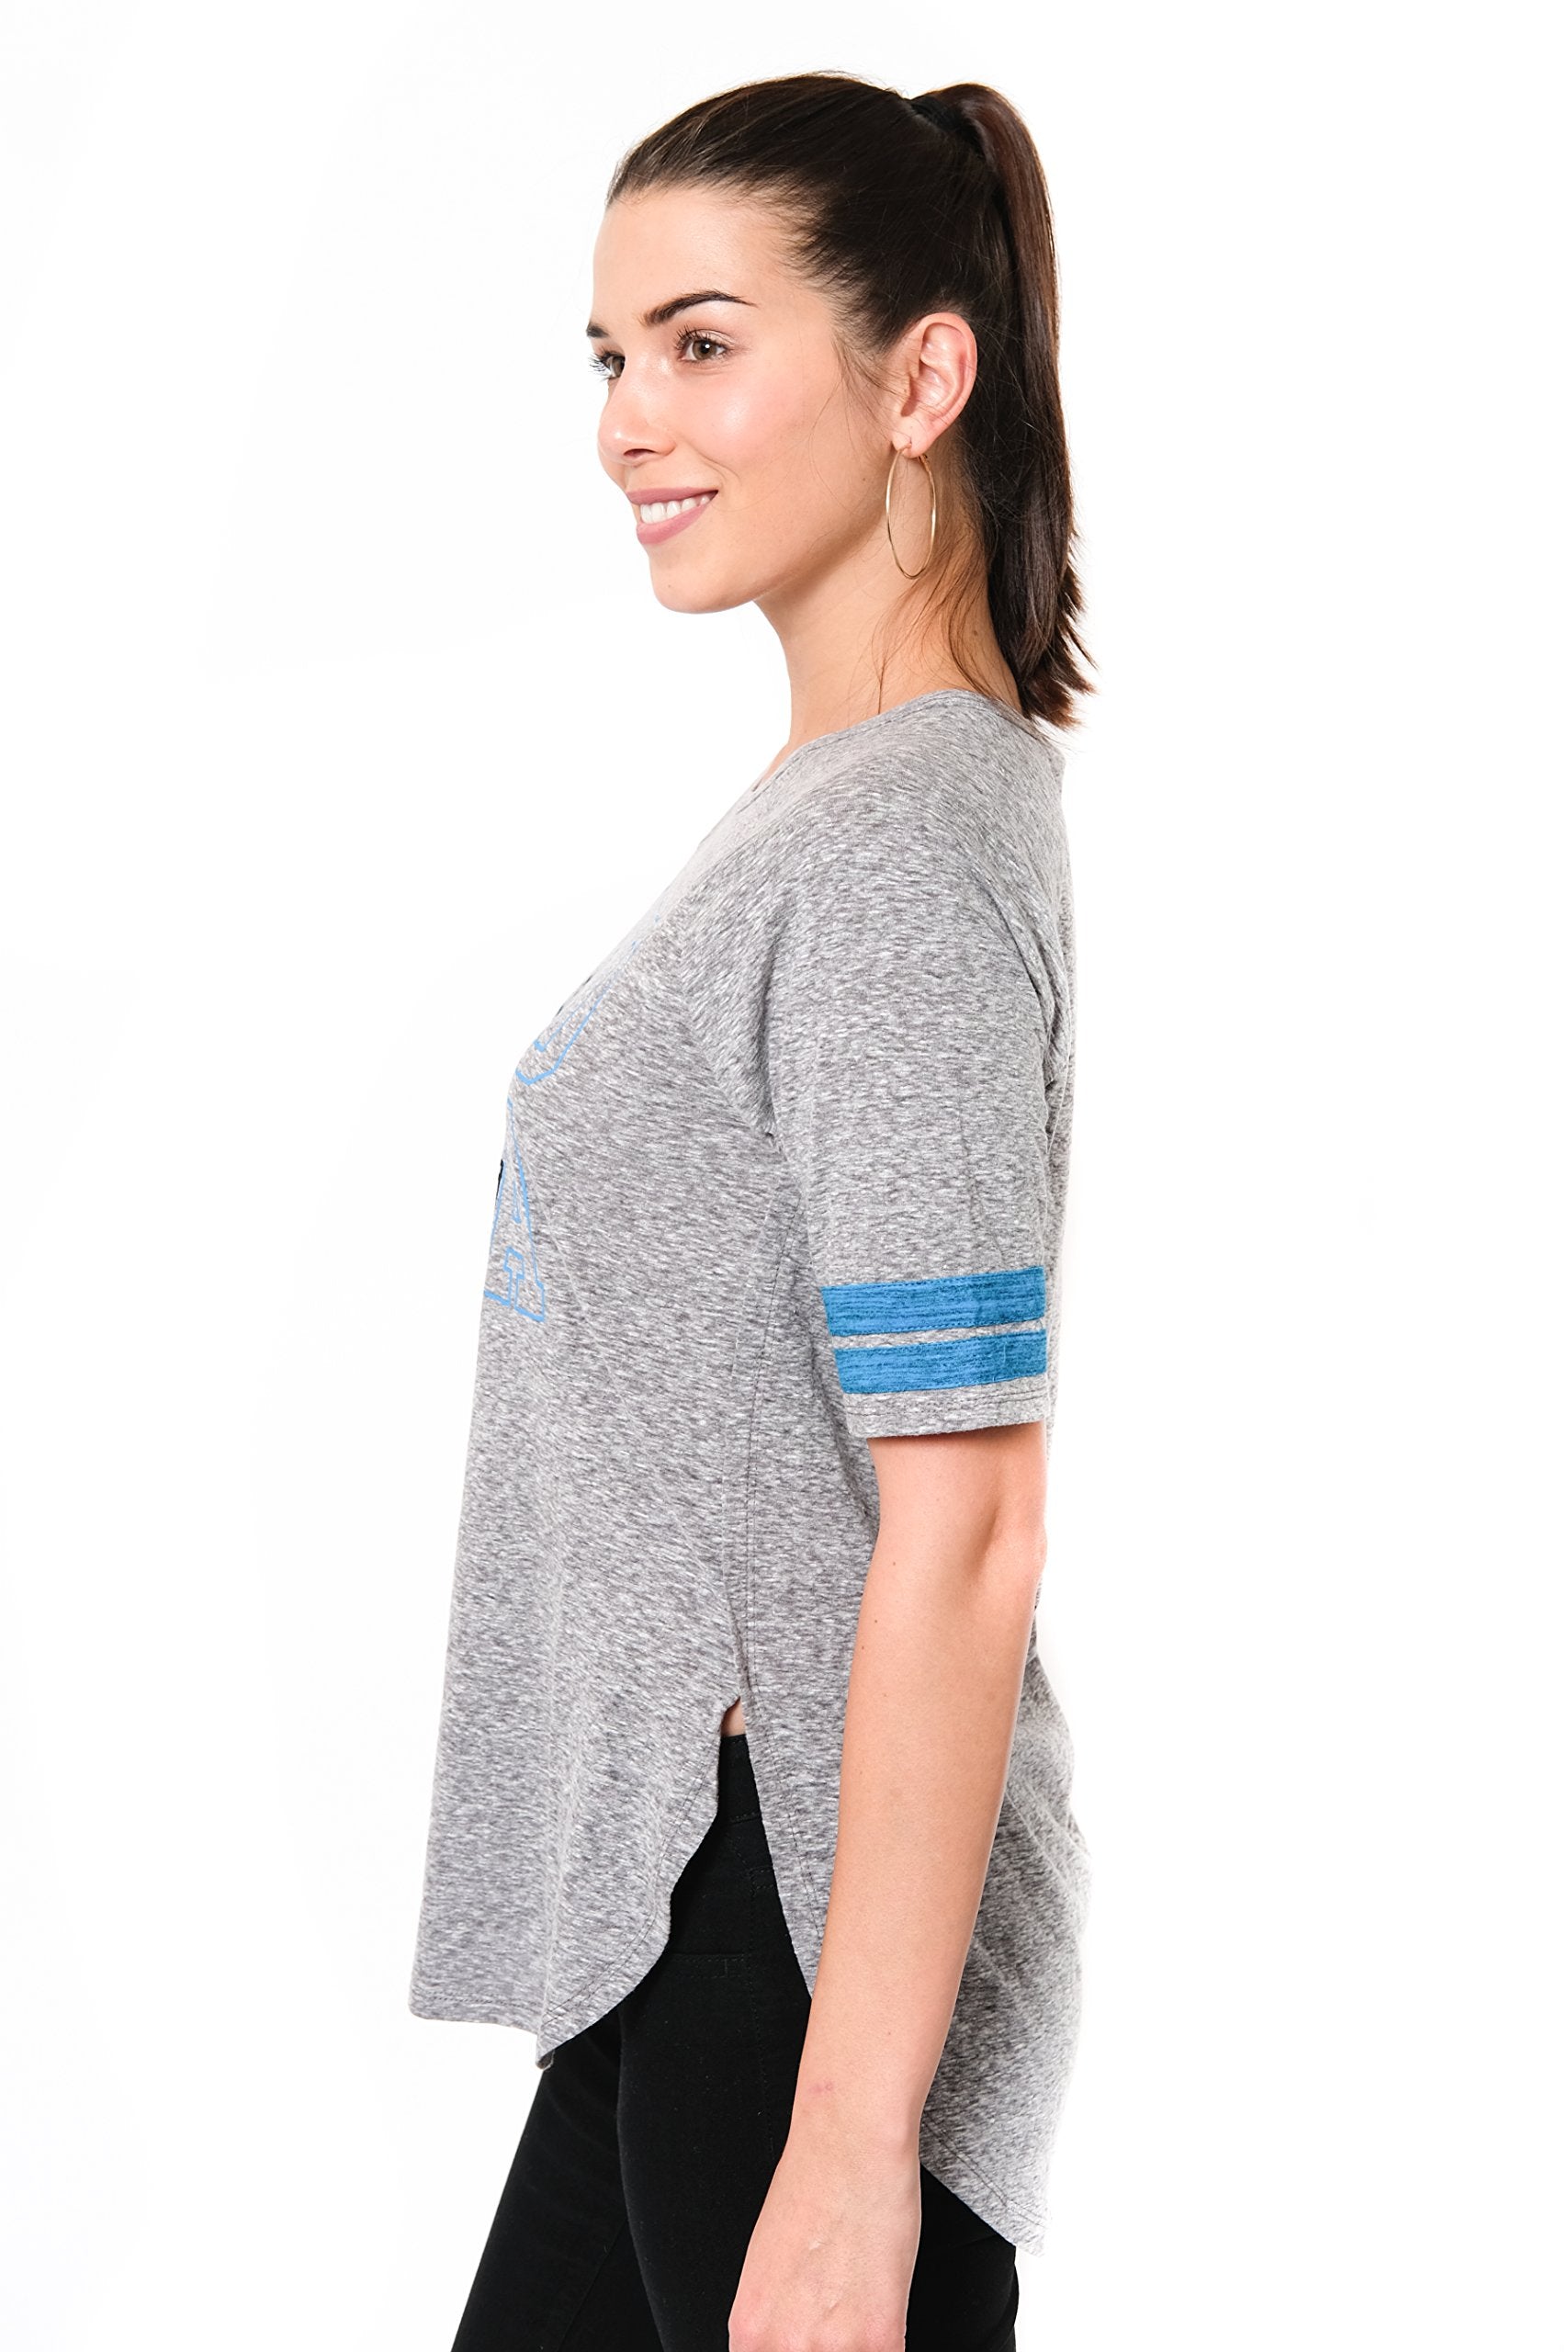 Ultra Game NFL Carolina Panthers Womens Super Soft Modal Vintage Stripe T-Shirt|Carolina Panthers